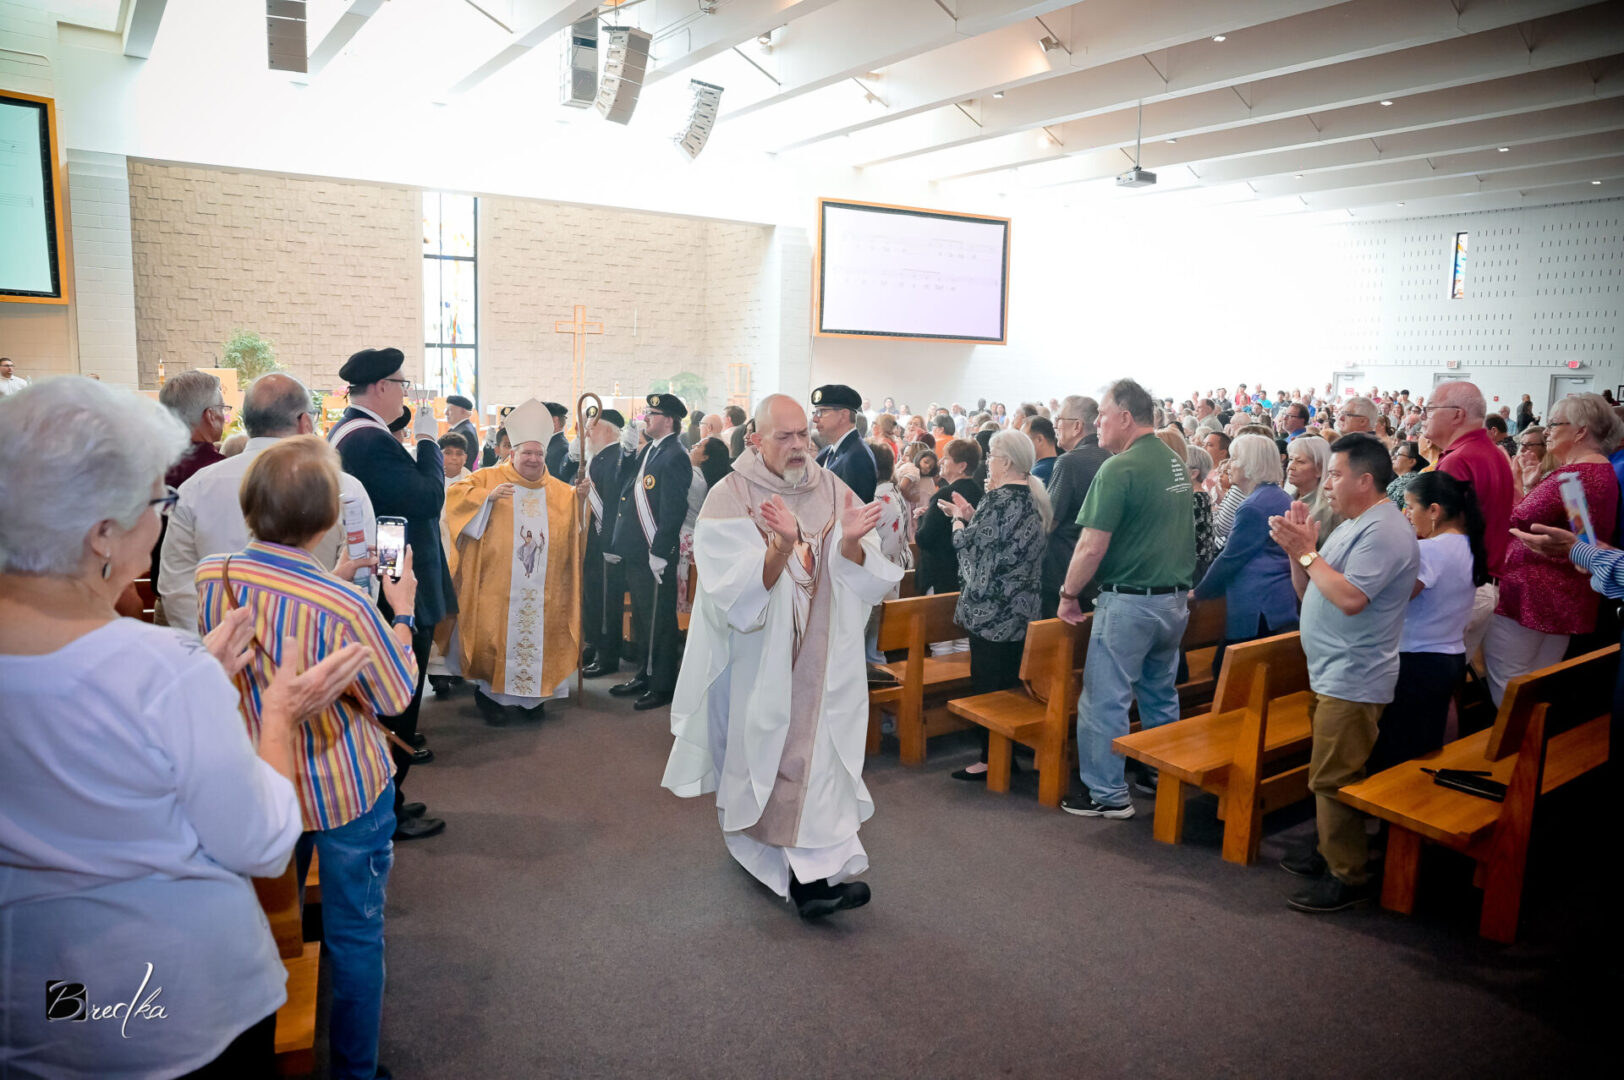 Man in white robe walks in church service.